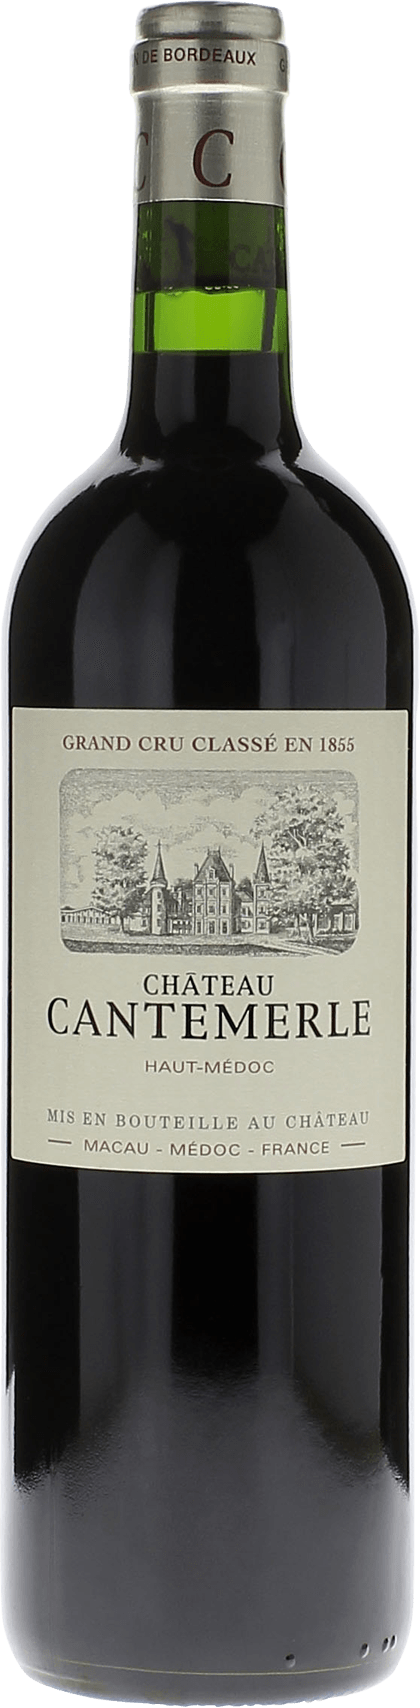 Cantemerle 1998 5me Grand cru class Mdoc, Bordeaux rouge